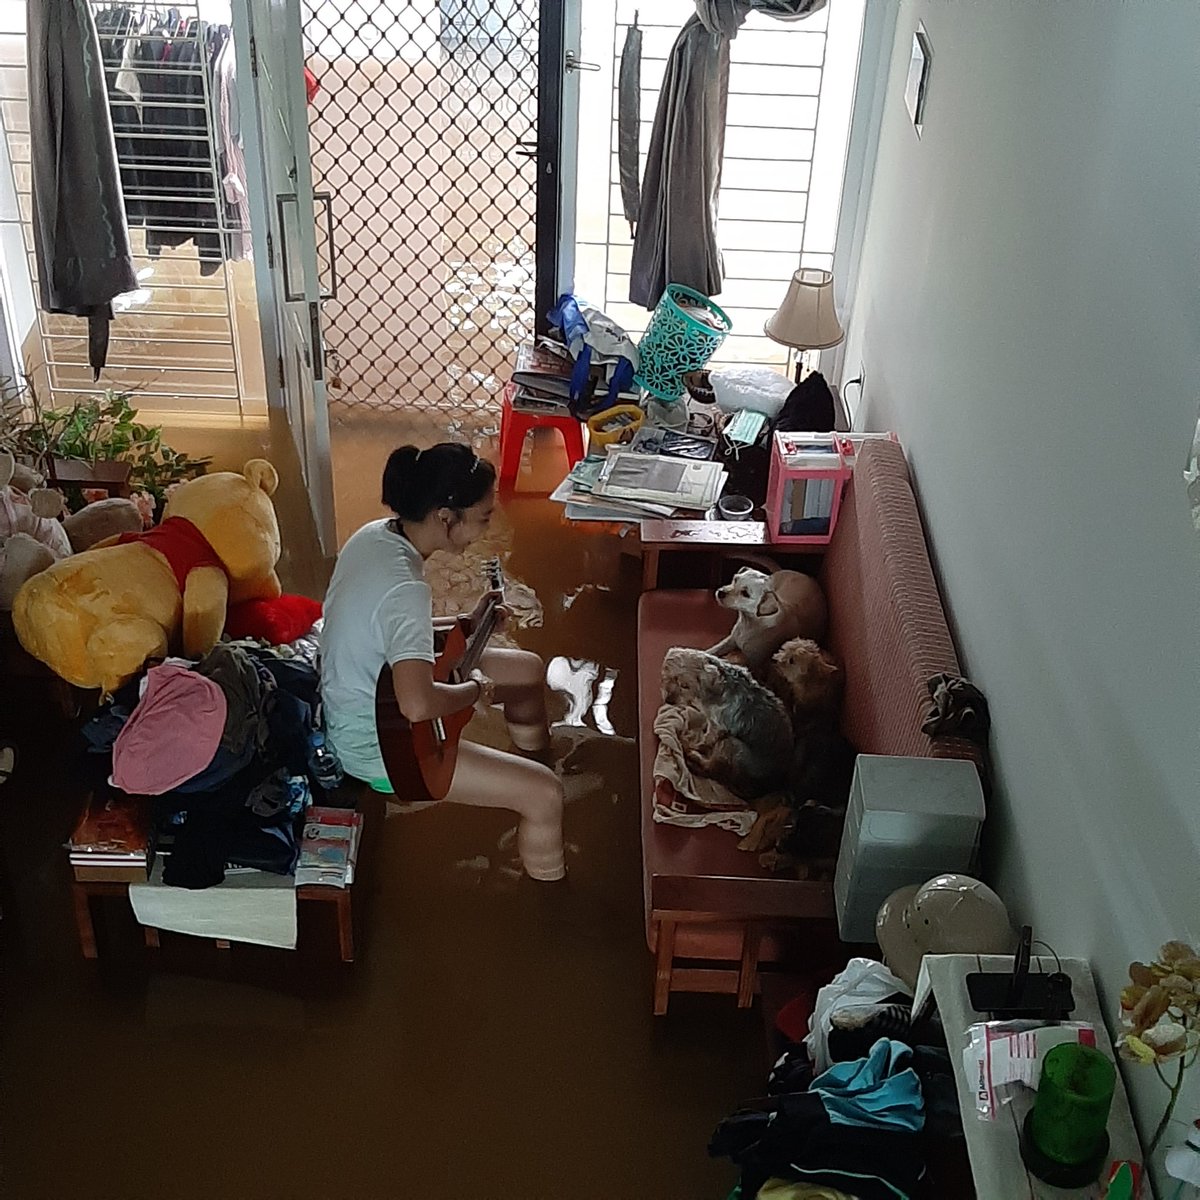 menghibur korban banjir paling menderita di komplek pesanggrahan ciputat. moga manteman yang kebanjiran baik-baik saja 🍻